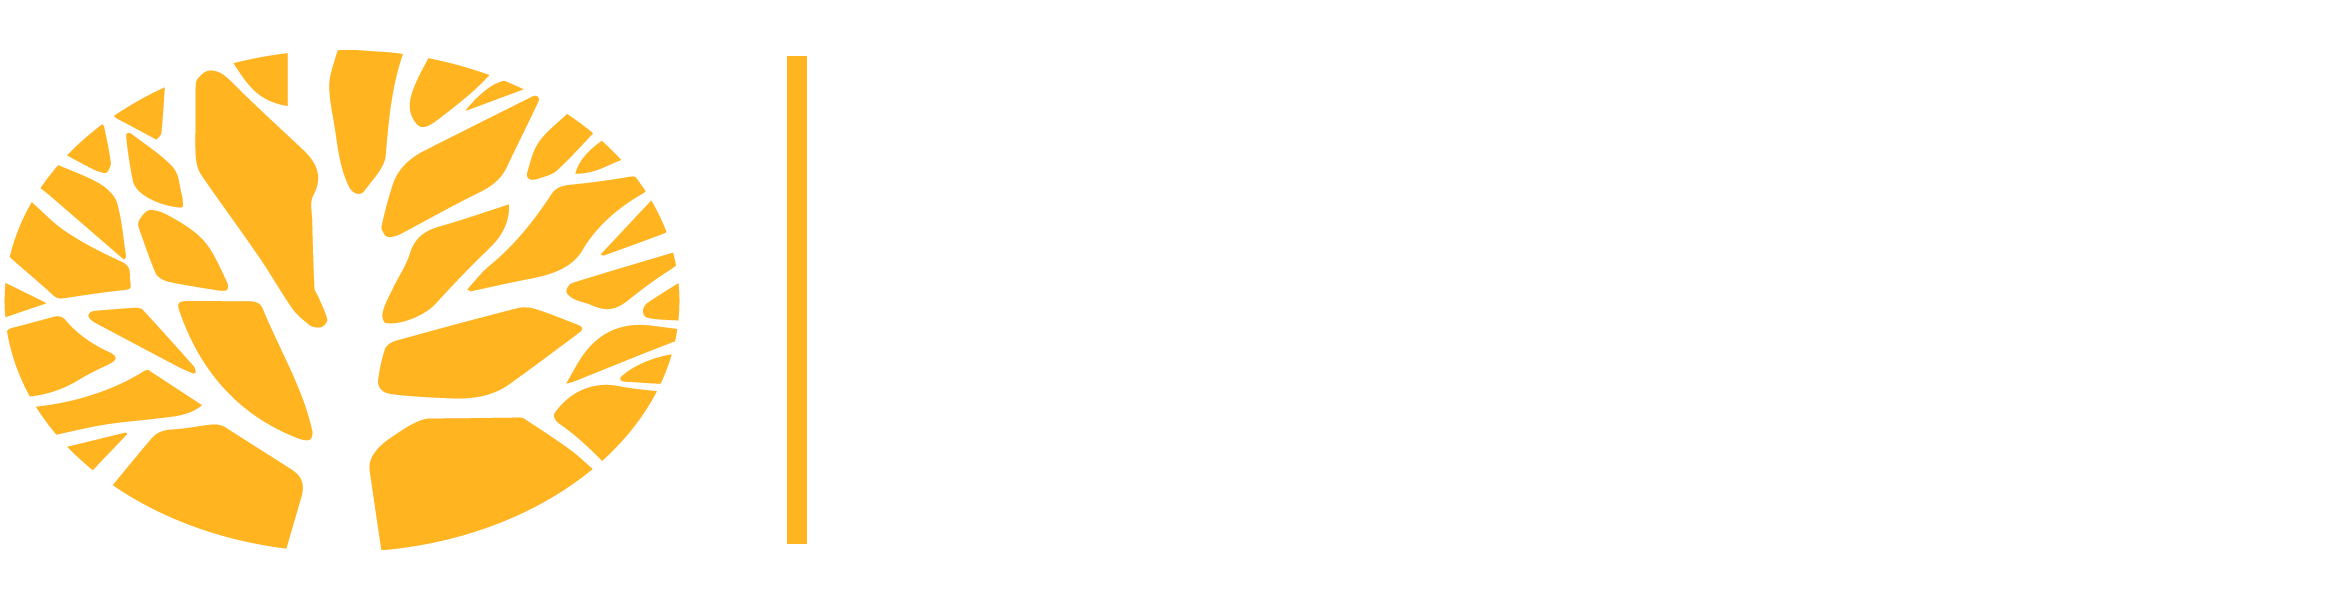 Western DuPage Landscaping